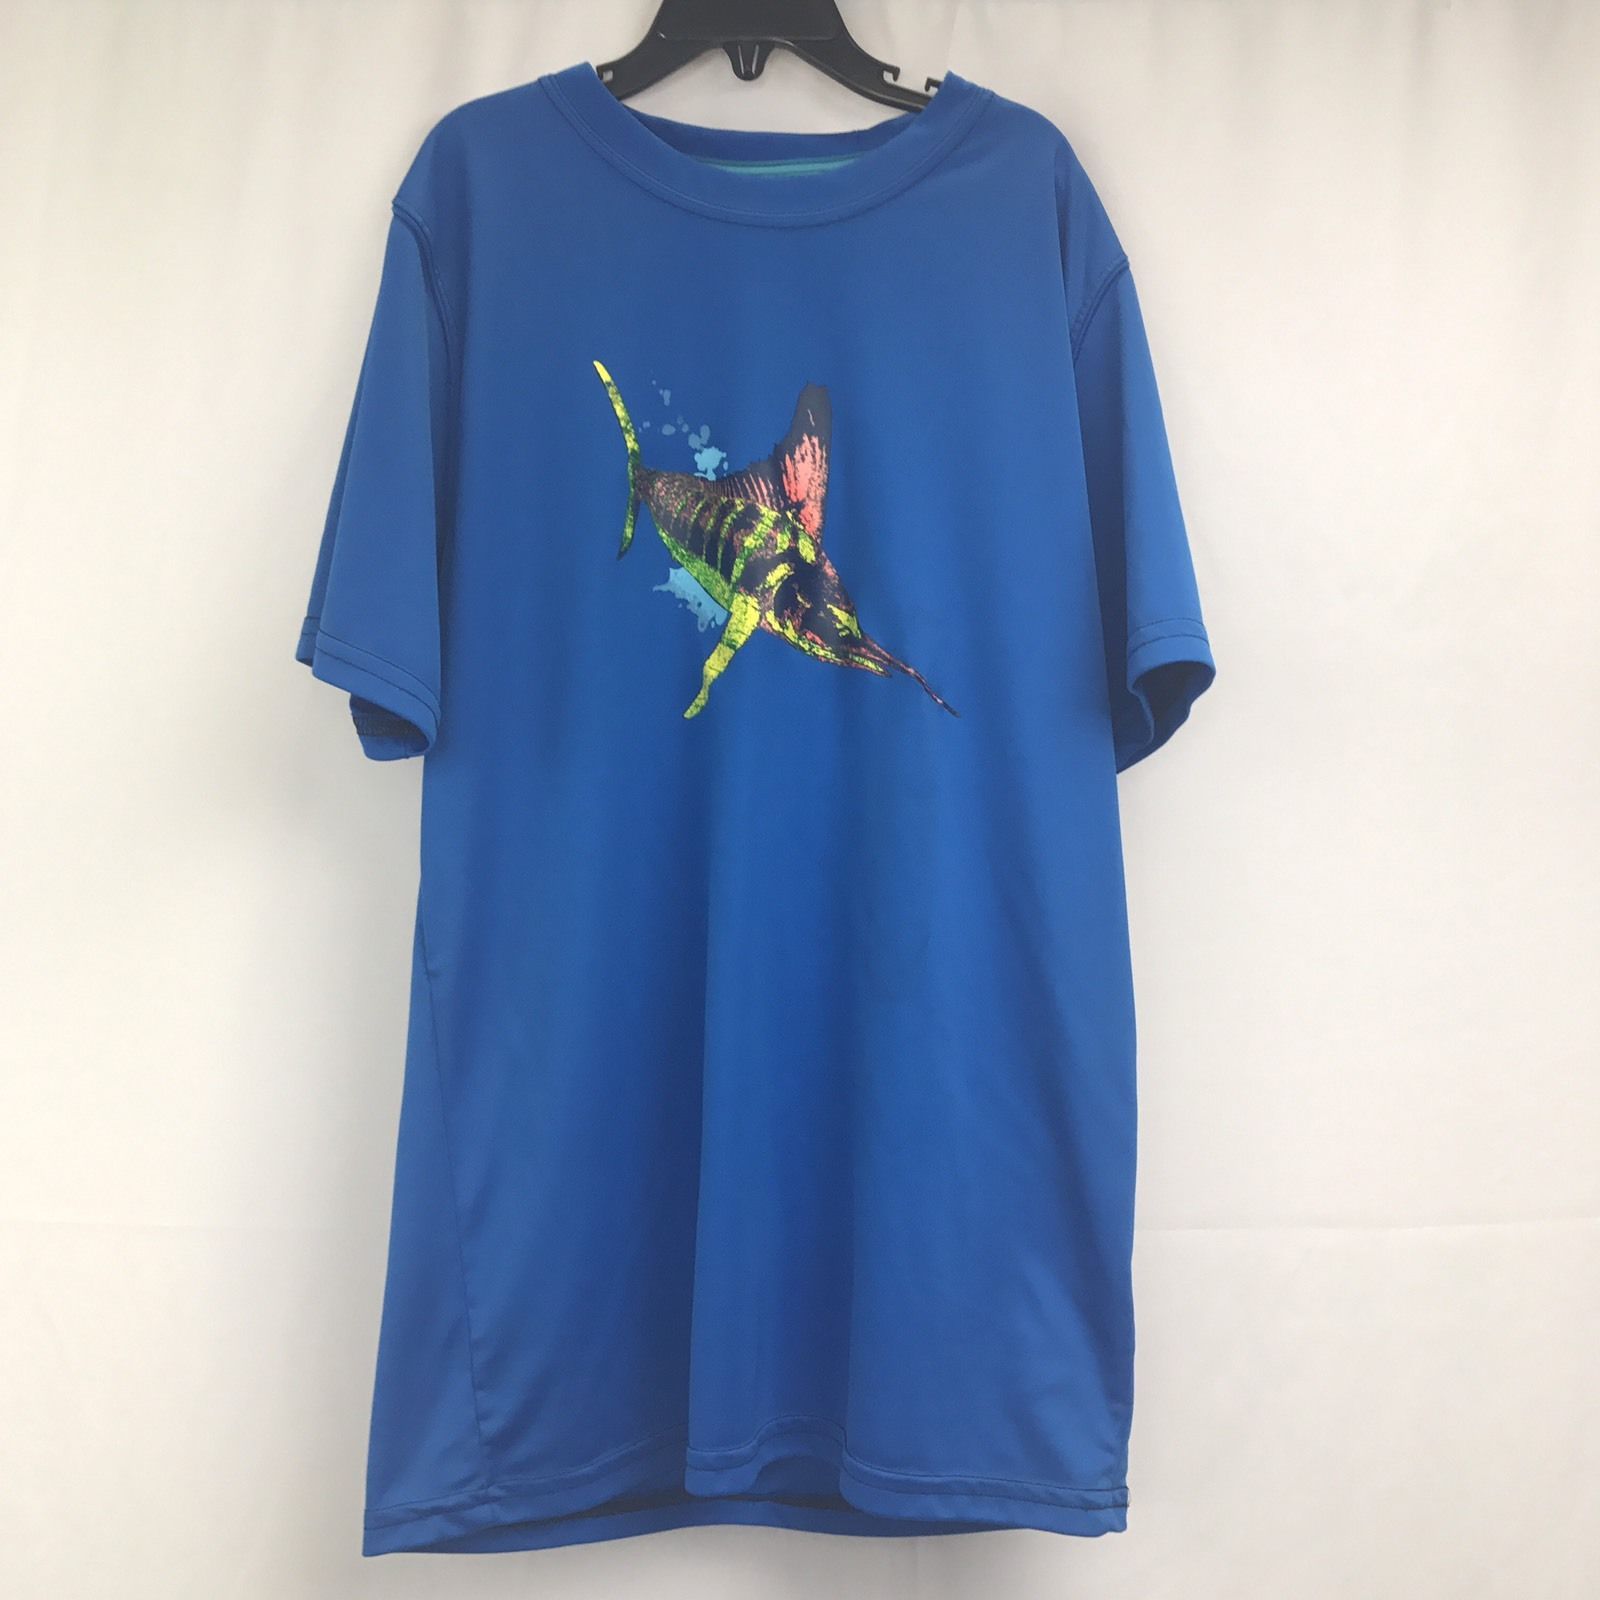 Primary image for Magellan Outdoors Boys Blue Shirt XL ( 18/20 ) Fish Gear Swordfish Short sleeve